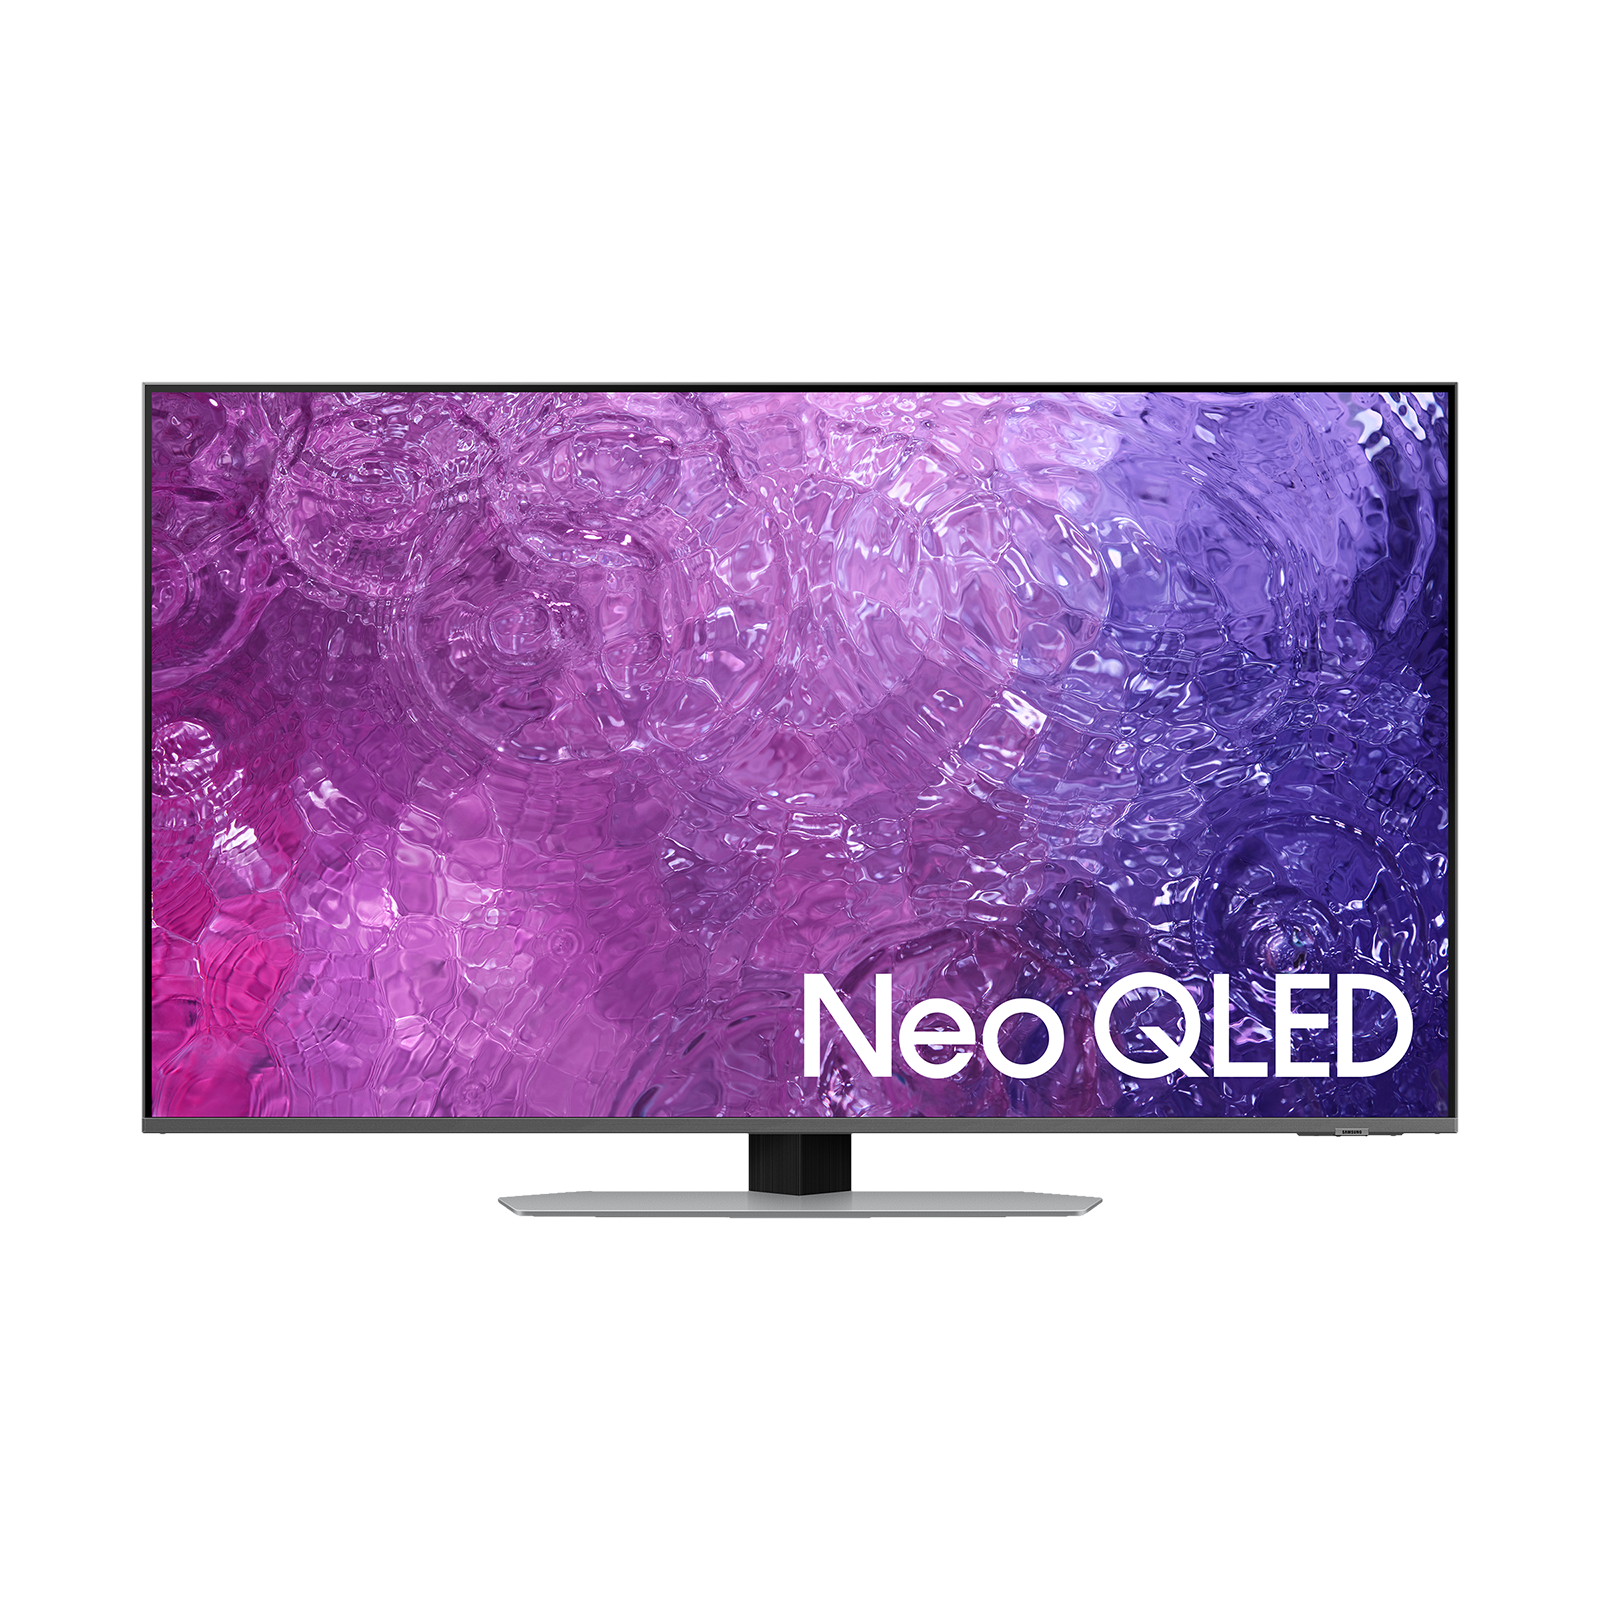 Buy Hisense U6K 139 cm (55 inch) QLED 4K Ultra HD Google TV with Dolby  Atmos (2023 model) Online - Croma